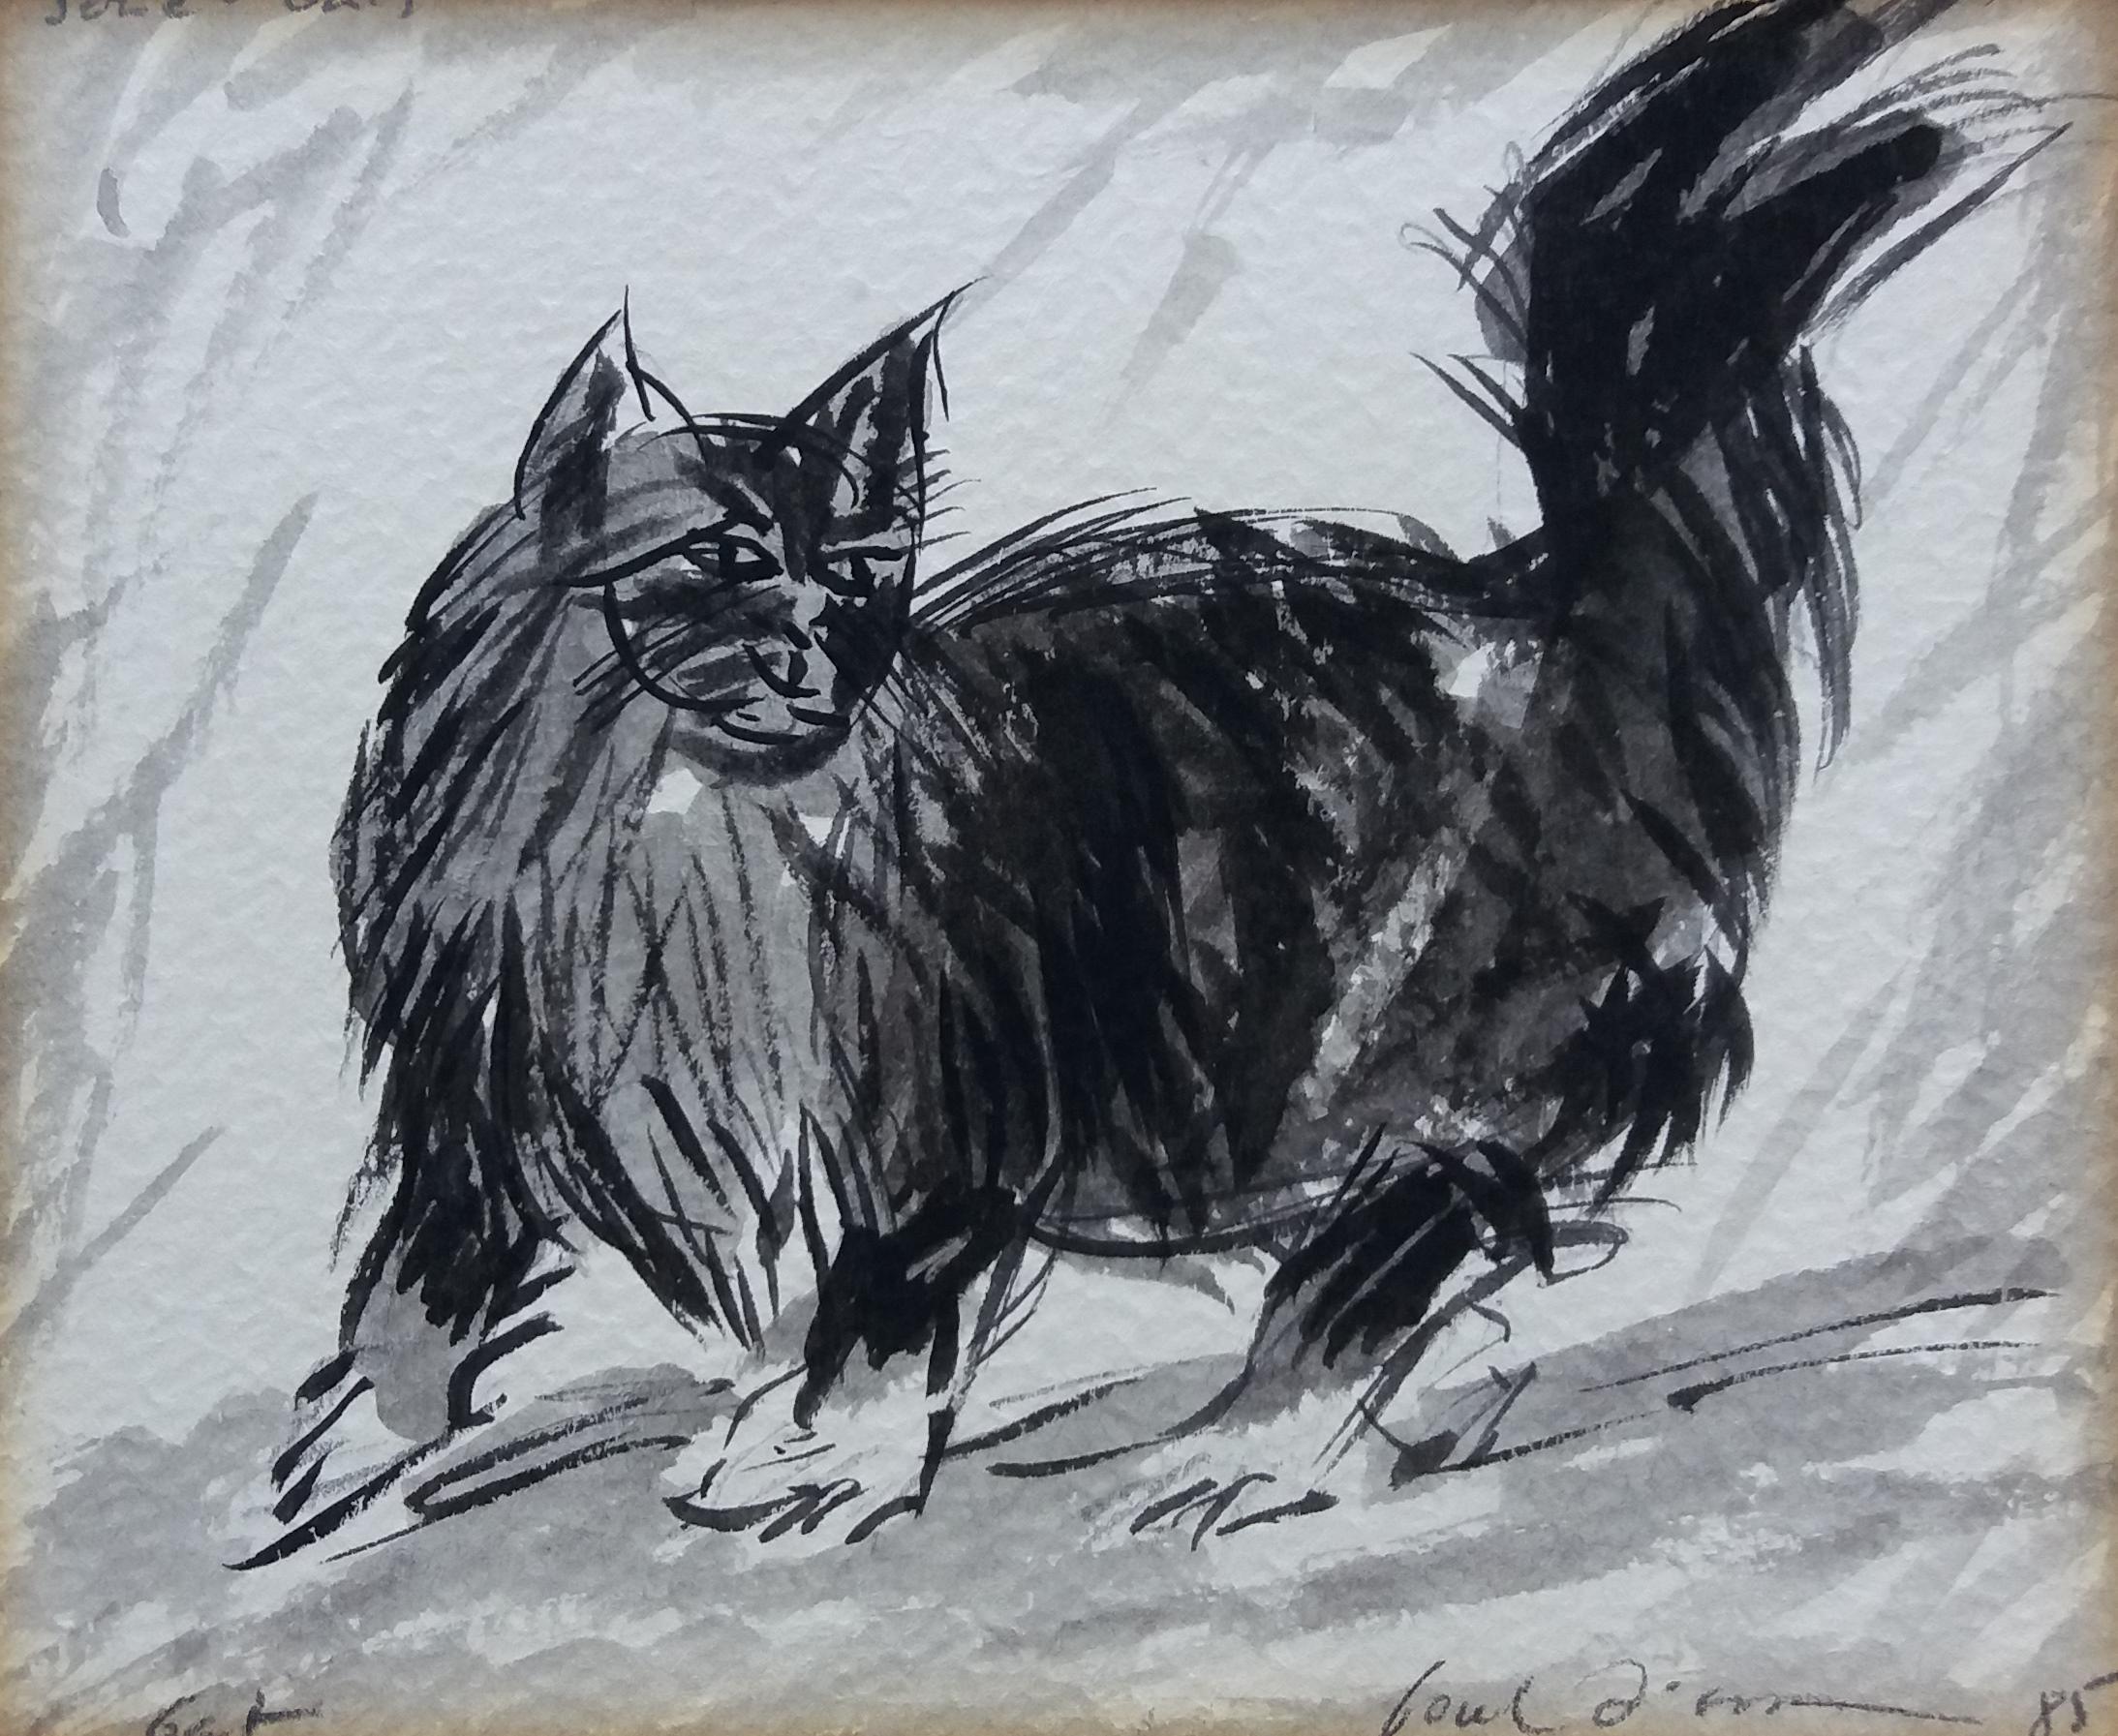  Font Diaz 28 Black Cat original  ink drawing realist painting For Sale 1